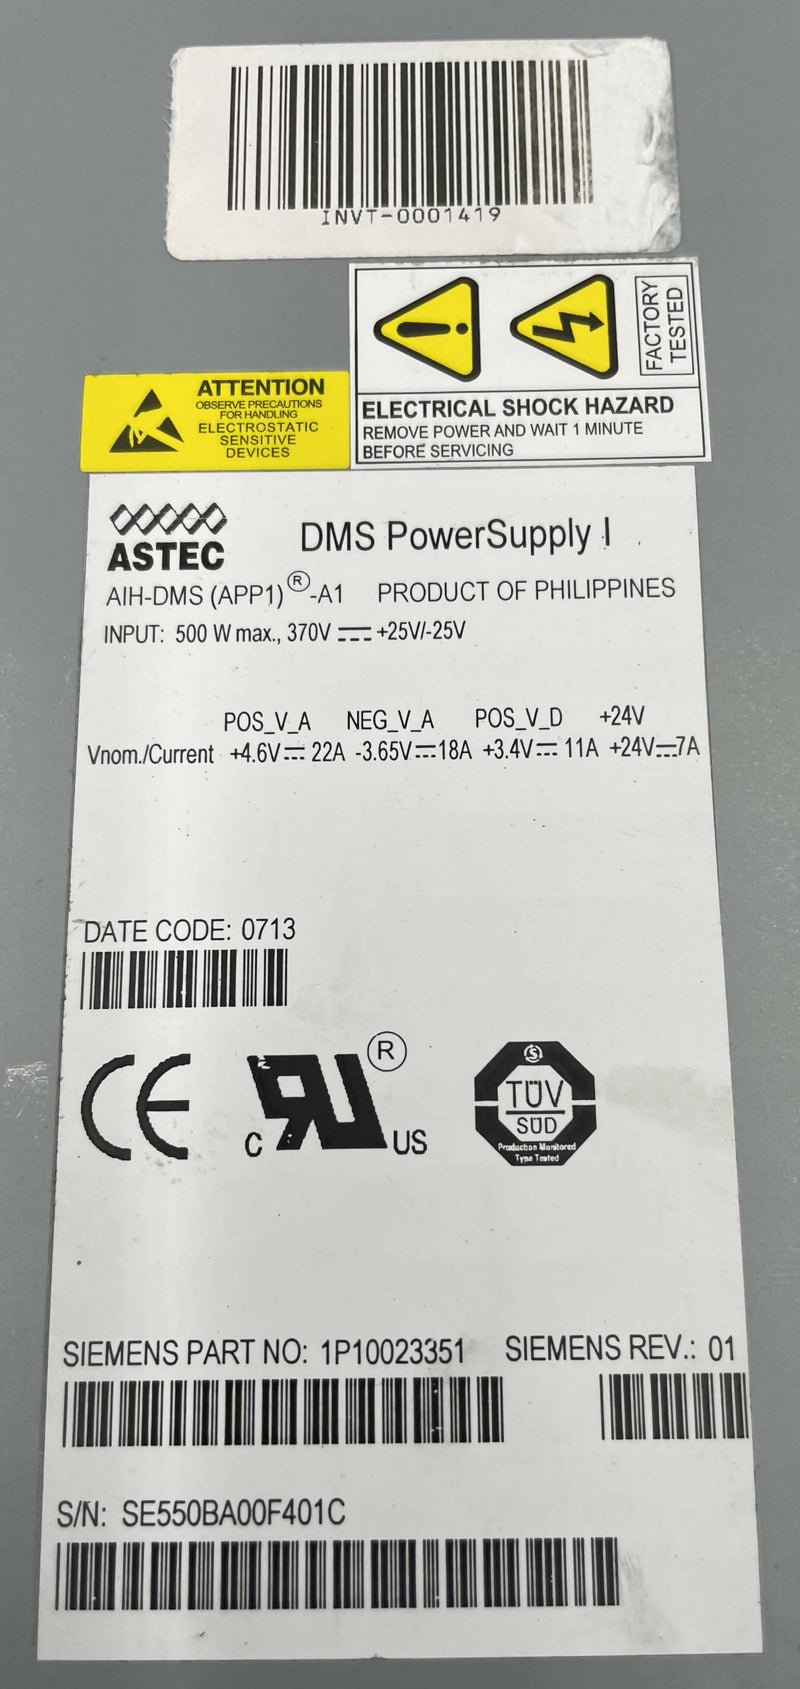 DMS Power Supply (10023351) SIEMENS